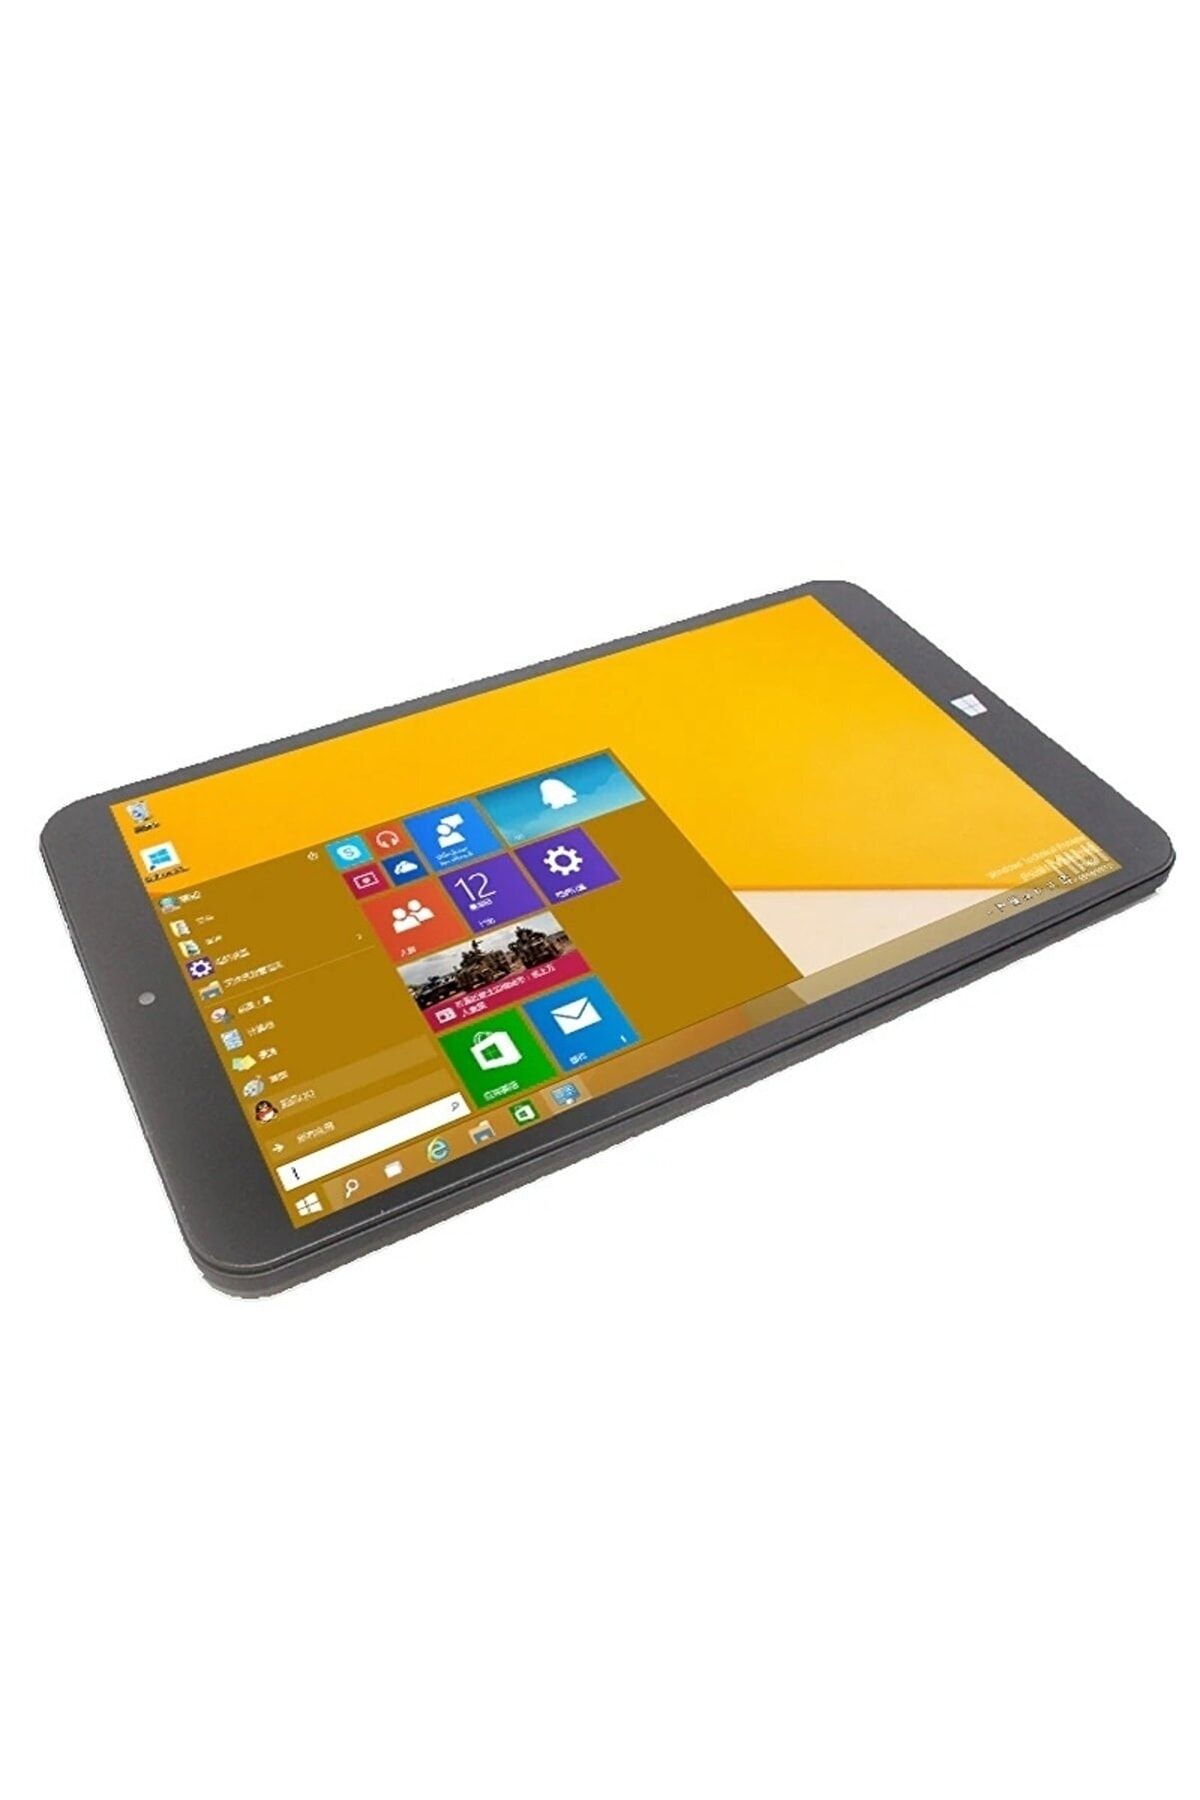 FOSILTECH 8.1 Inç Windows 10 Tablet Pc